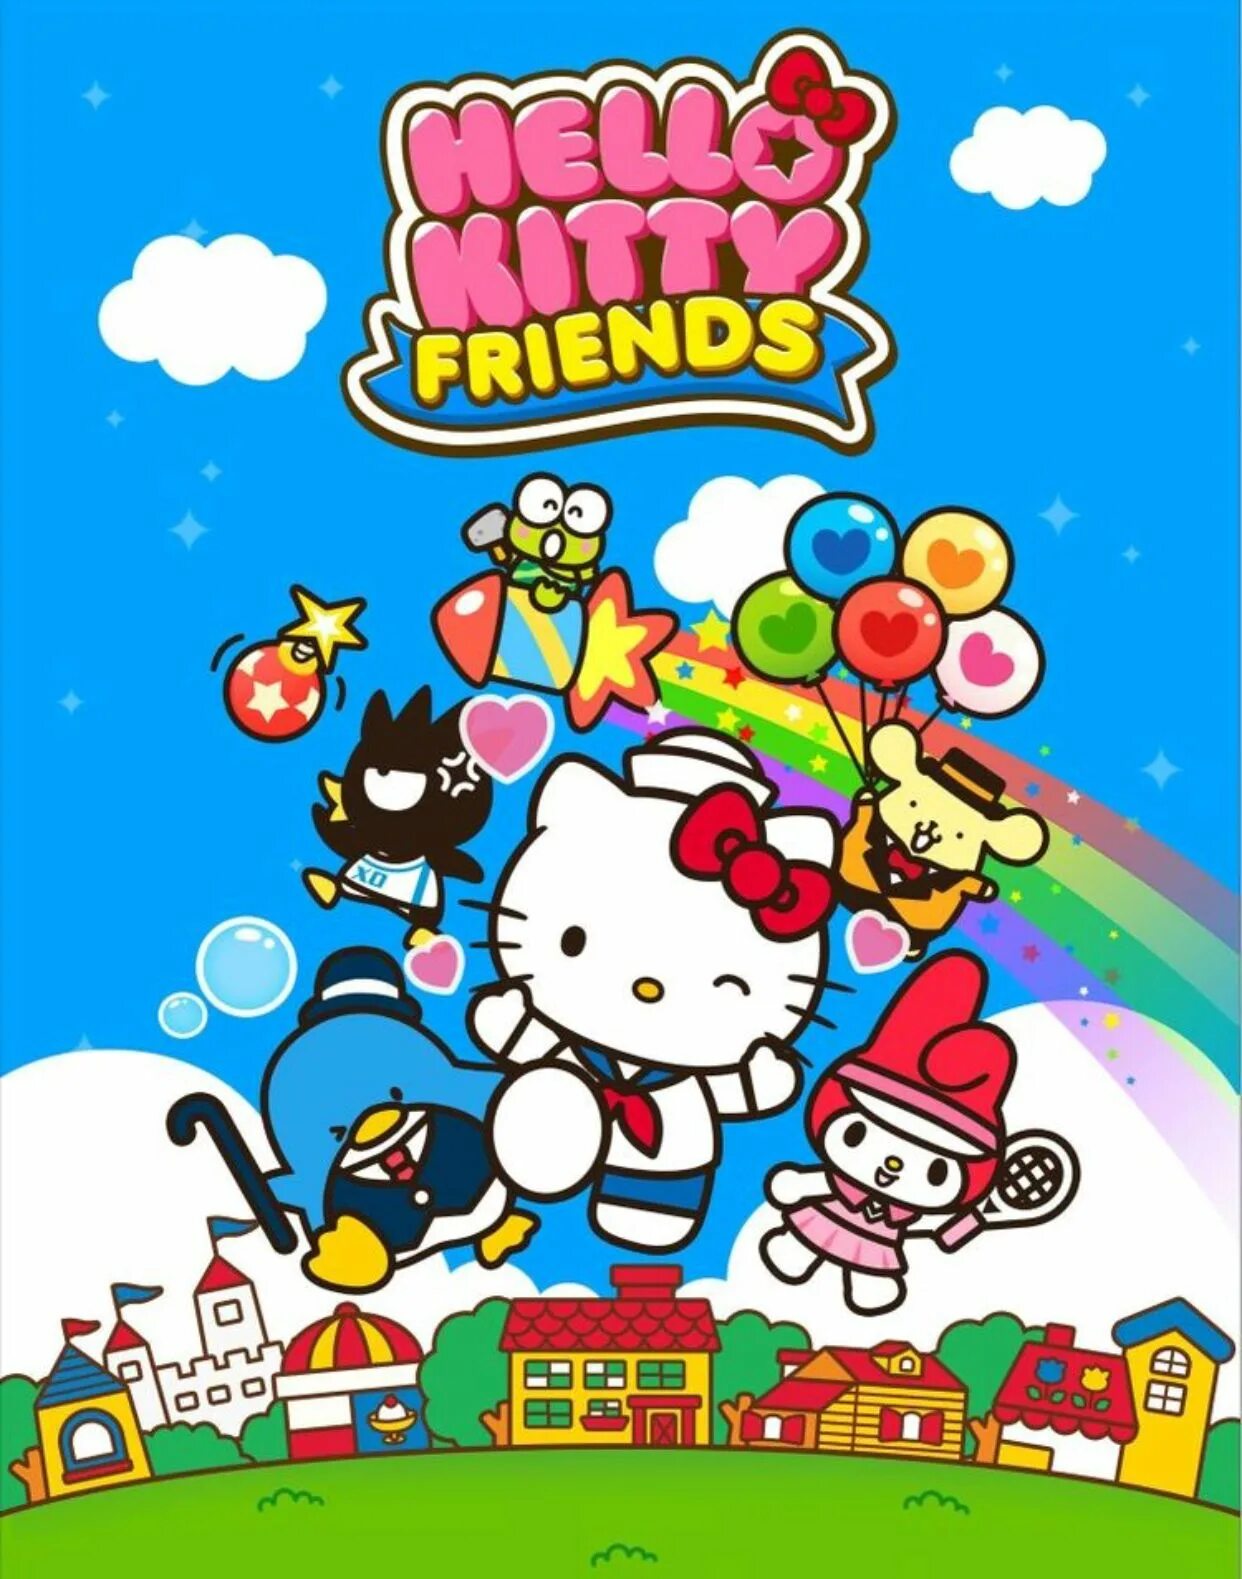 Хэллоу игра. Игра Хелло Китти. Санрио Китти. Hello Kitty friends игра. Sanrio hello Kitty персонажи.